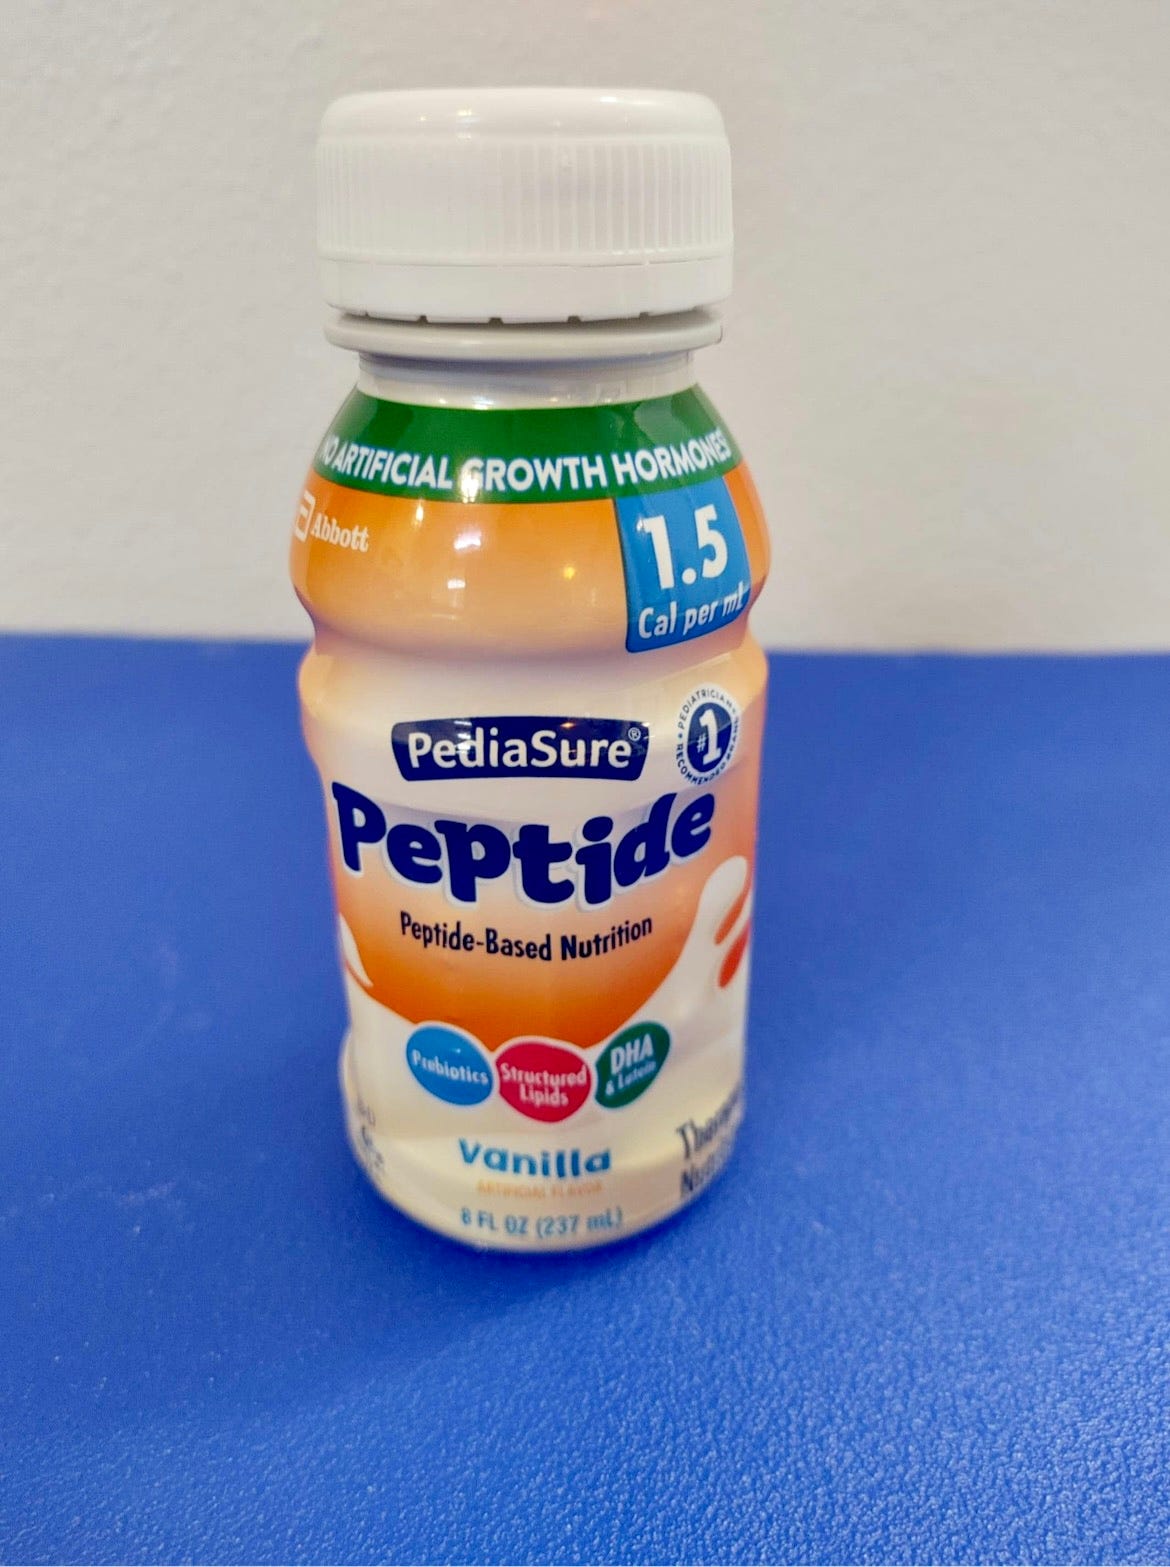 A close-up of an orange bottle of Abbott Laboratories' Pediasure Peptide 1.5 cal formula on a blue tabletop. 